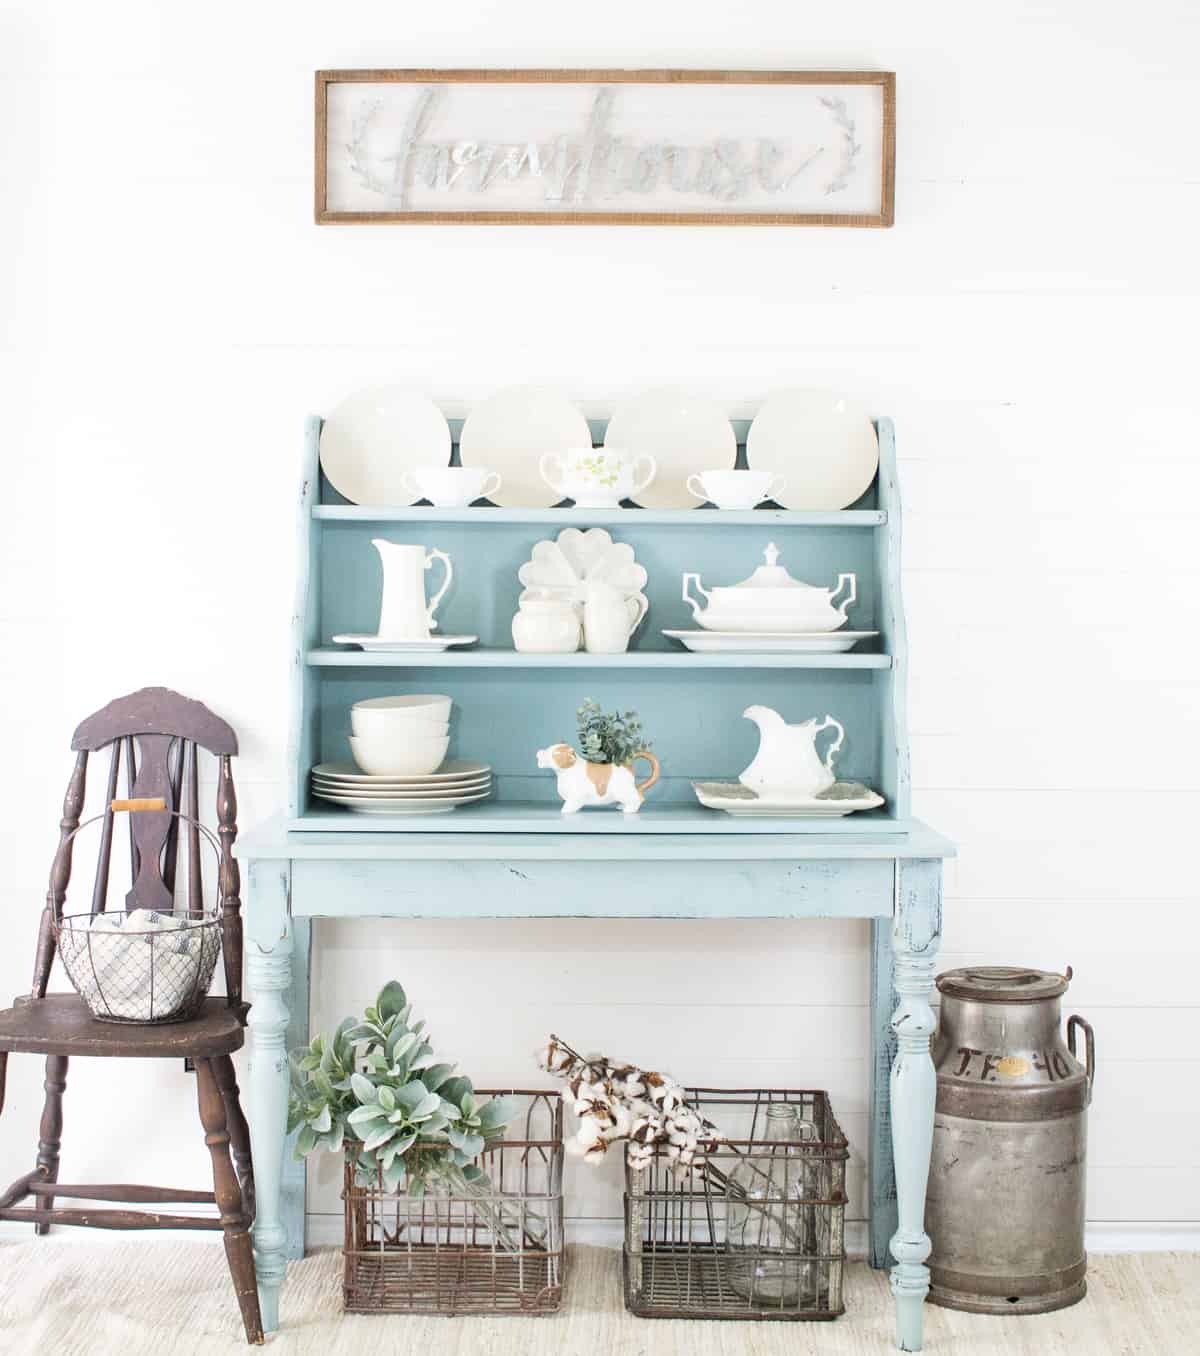 Elegance Hutch #DIY #furniturepaint #paintedfurniture #homedecor #chalkpaint #hutch #blue #elegance #farmhouse #shabbychic #countrychicpaint - blog.countrychicpaint.com